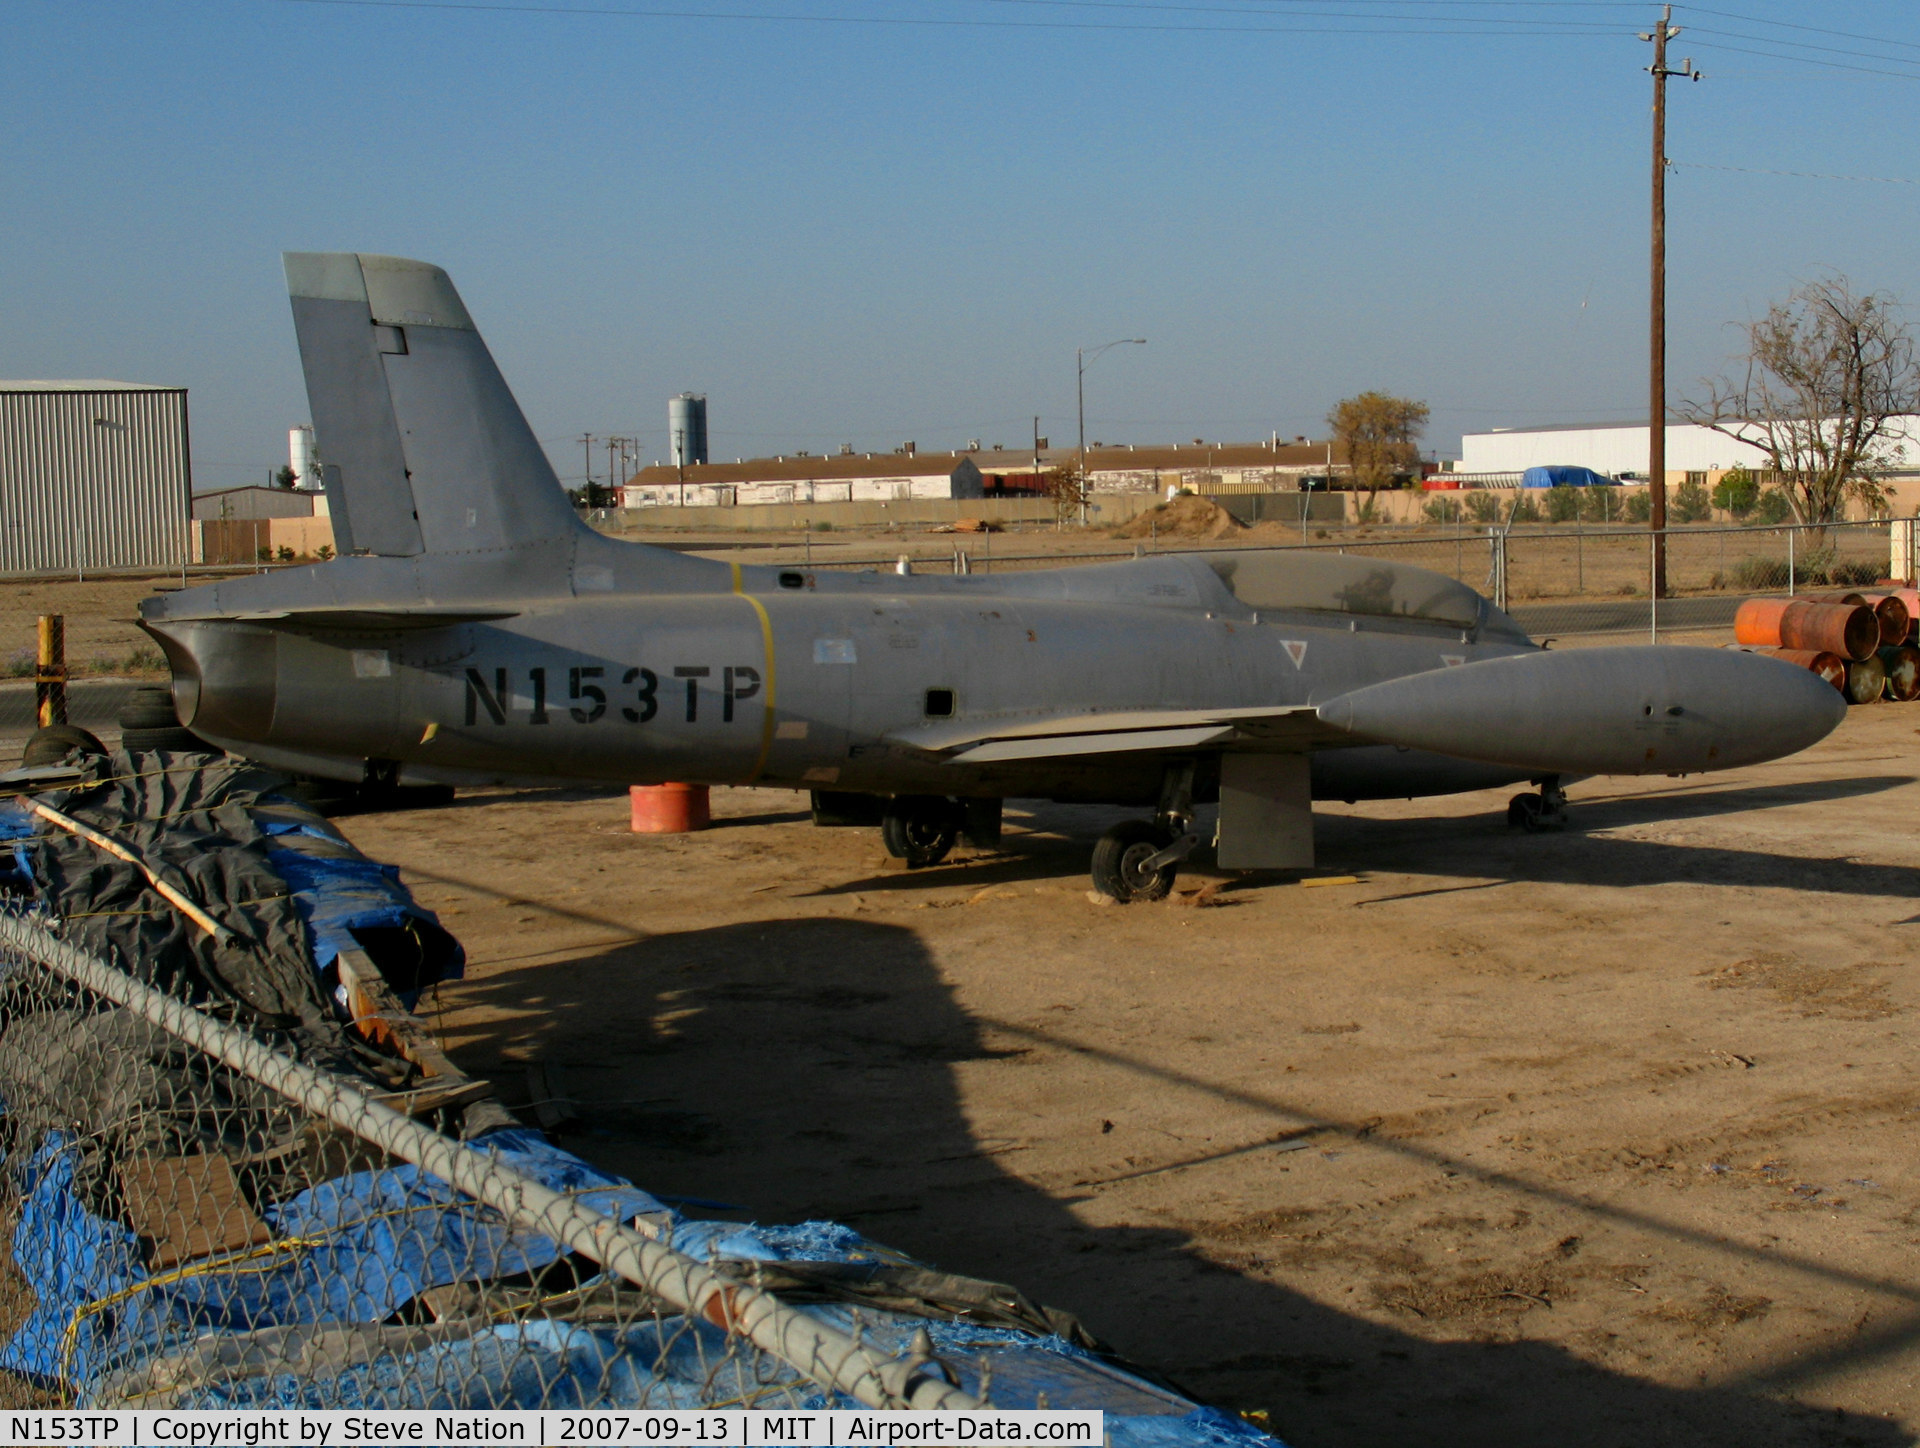 N153TP, 1993 Atlas MB-326M Impala 1 C/N 138/6369/A18, ex-Flight Research 1993 Aermacchi IMPALA MB-326M in museum yard at Minter Field (Shafter), CA